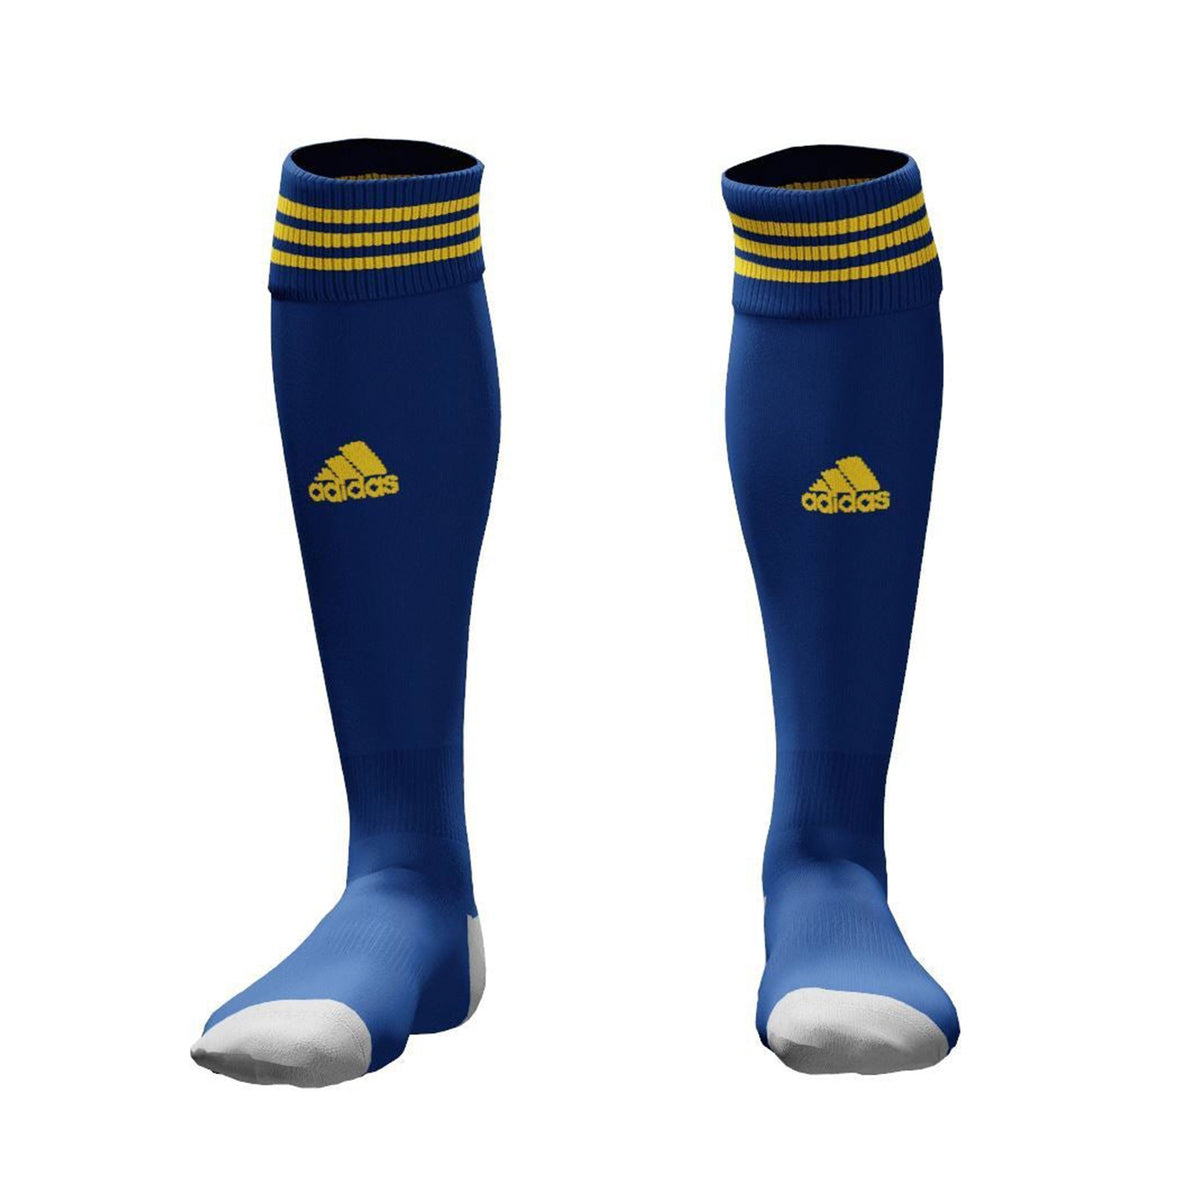 adidas Custom Socks | Dark Blue/Yellow Soccer Socks Adidas Size 1 (3-4.5) Dark Blue/Yellow 